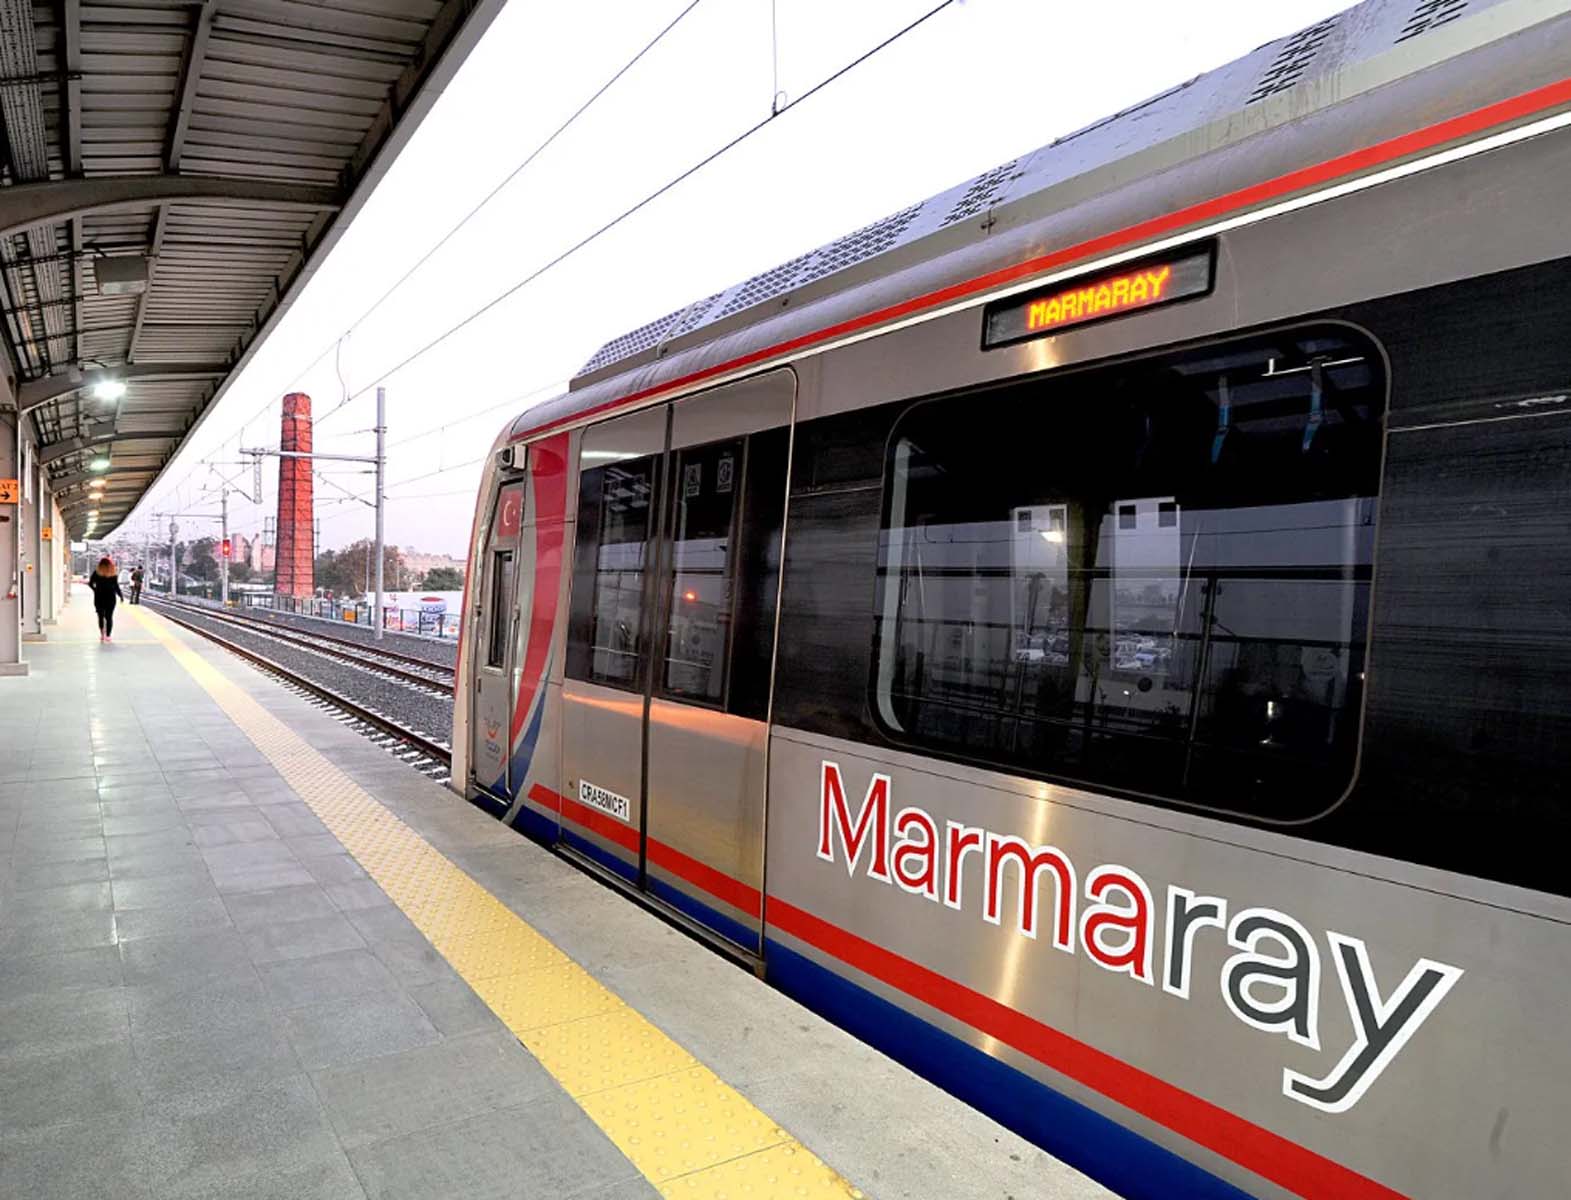 29 Mayıs 2022 Pazar İETT, Marmaray, gemi, tramvay ücretsiz mi? İstanbul toplu taşıma bedava mı?